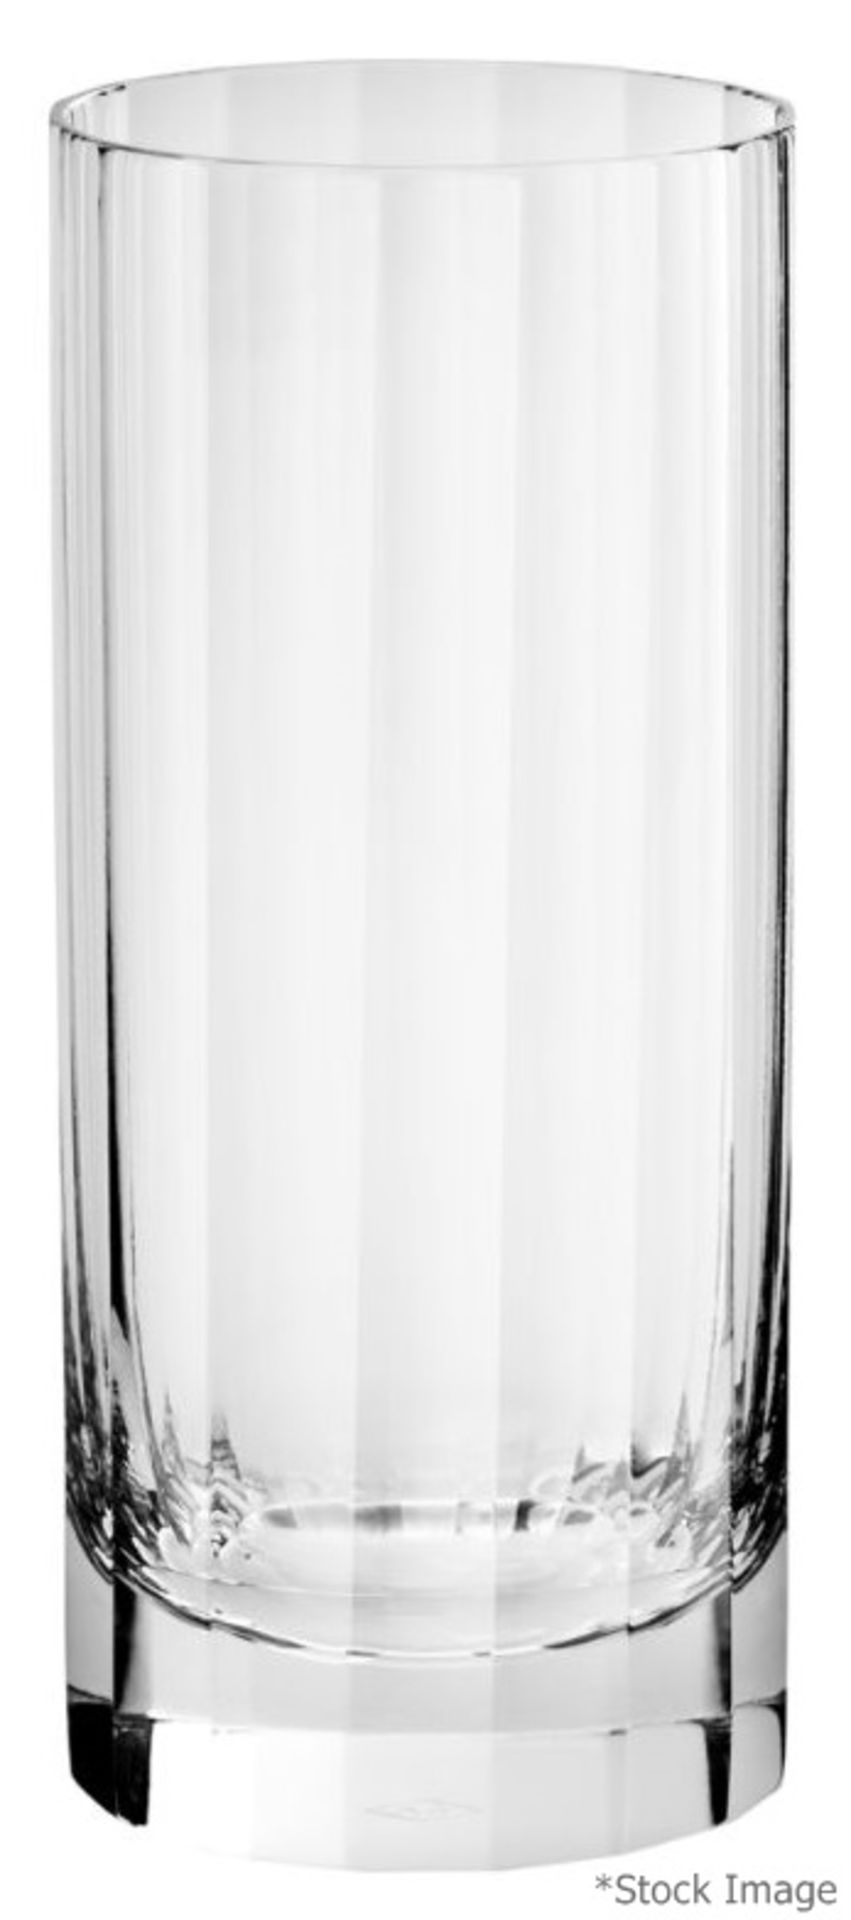 1 x RICHARD BRENDON Fluted Handmade Crystal Highball Glass (380ml) - Original Price £90.00